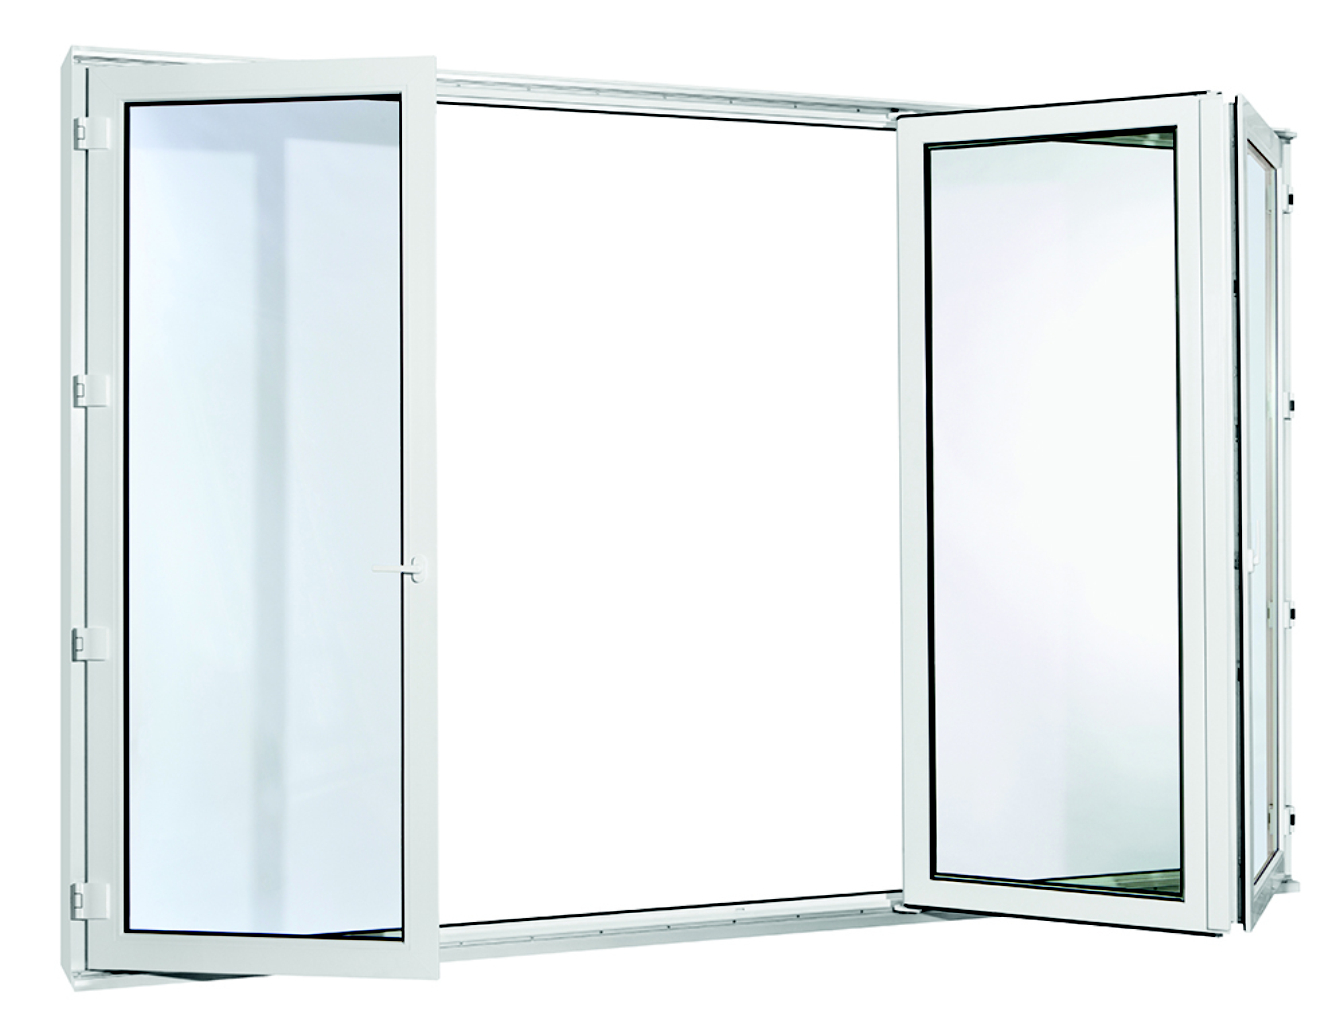 Contoh Model Pintu Kaca Rumah Minimalis | rumah-minimalis ...